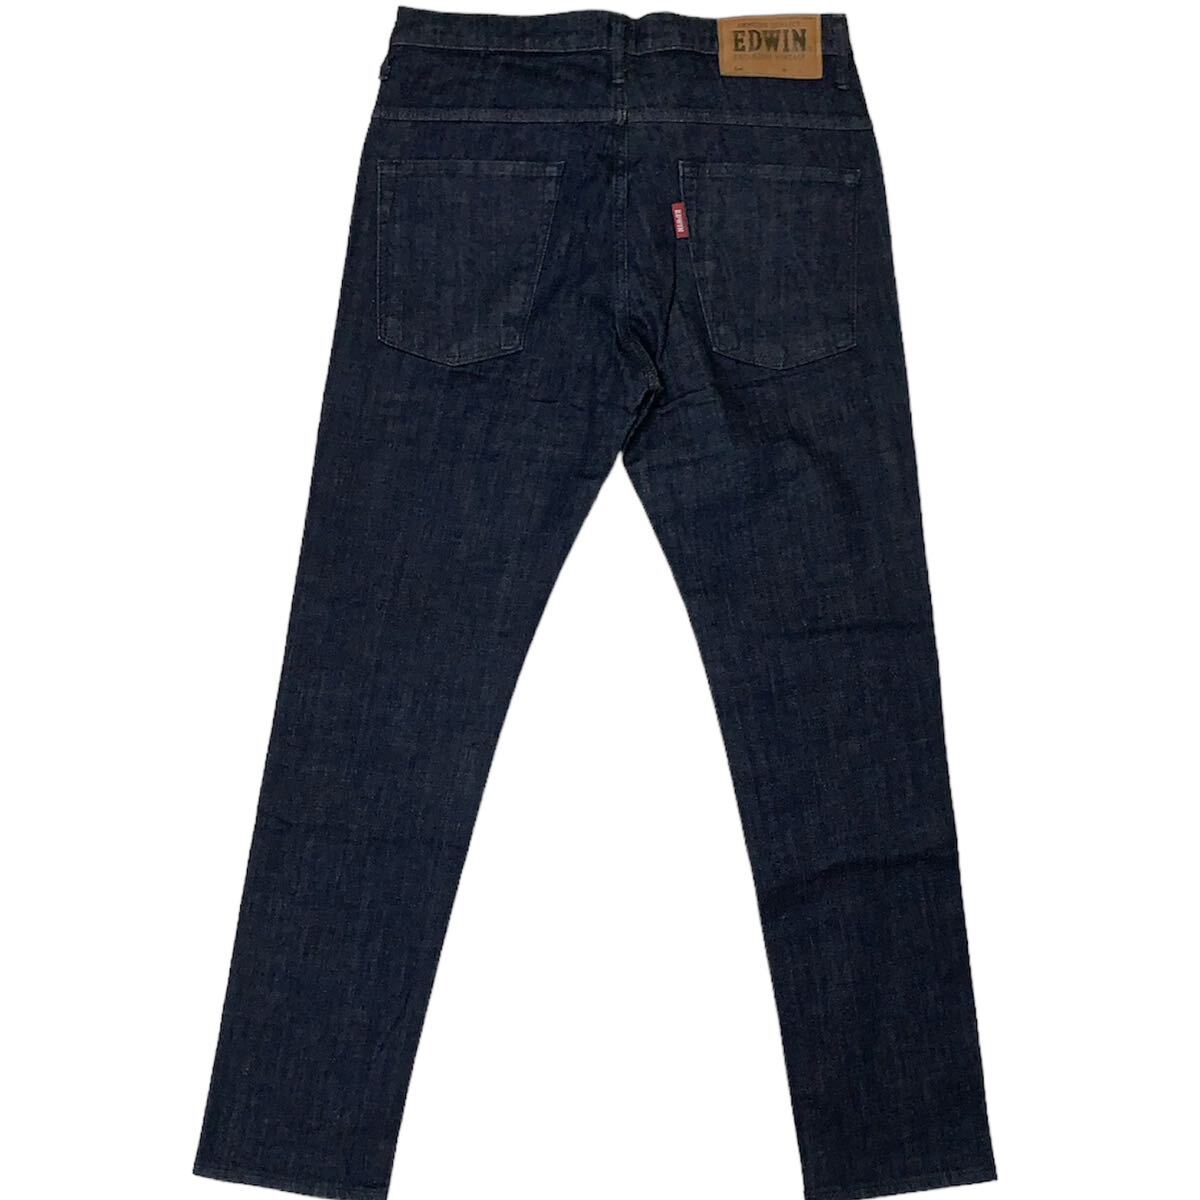  Edwin W36 402 XV tight Denim made in Japan EDWIN GENUINE QUALITY JEANS jeans Zip fly EX402-100